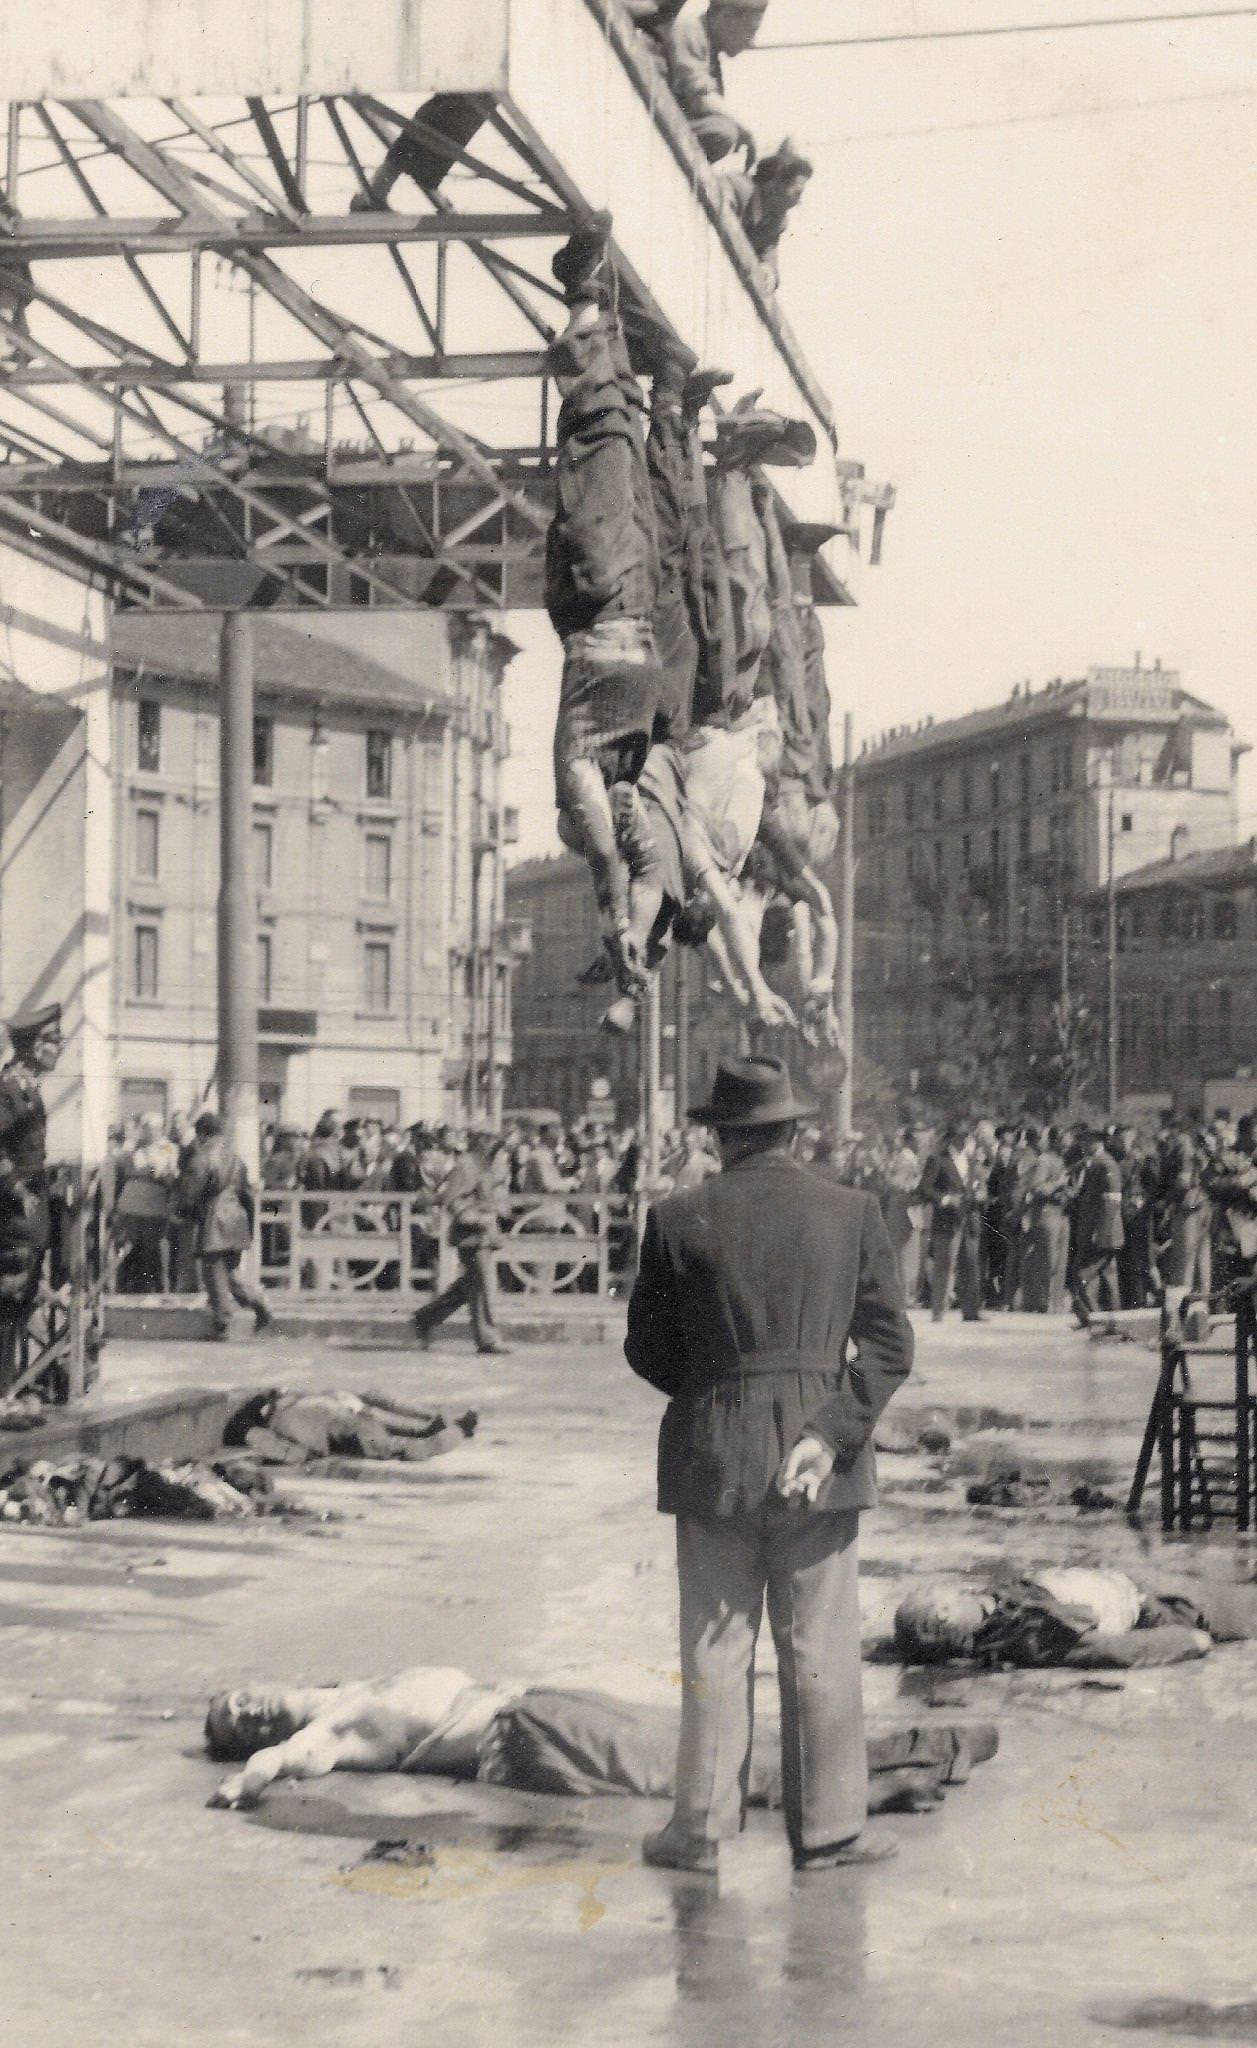 Benito Mussolini and Claretta Petacci's Death Displayed in Milan, 1945